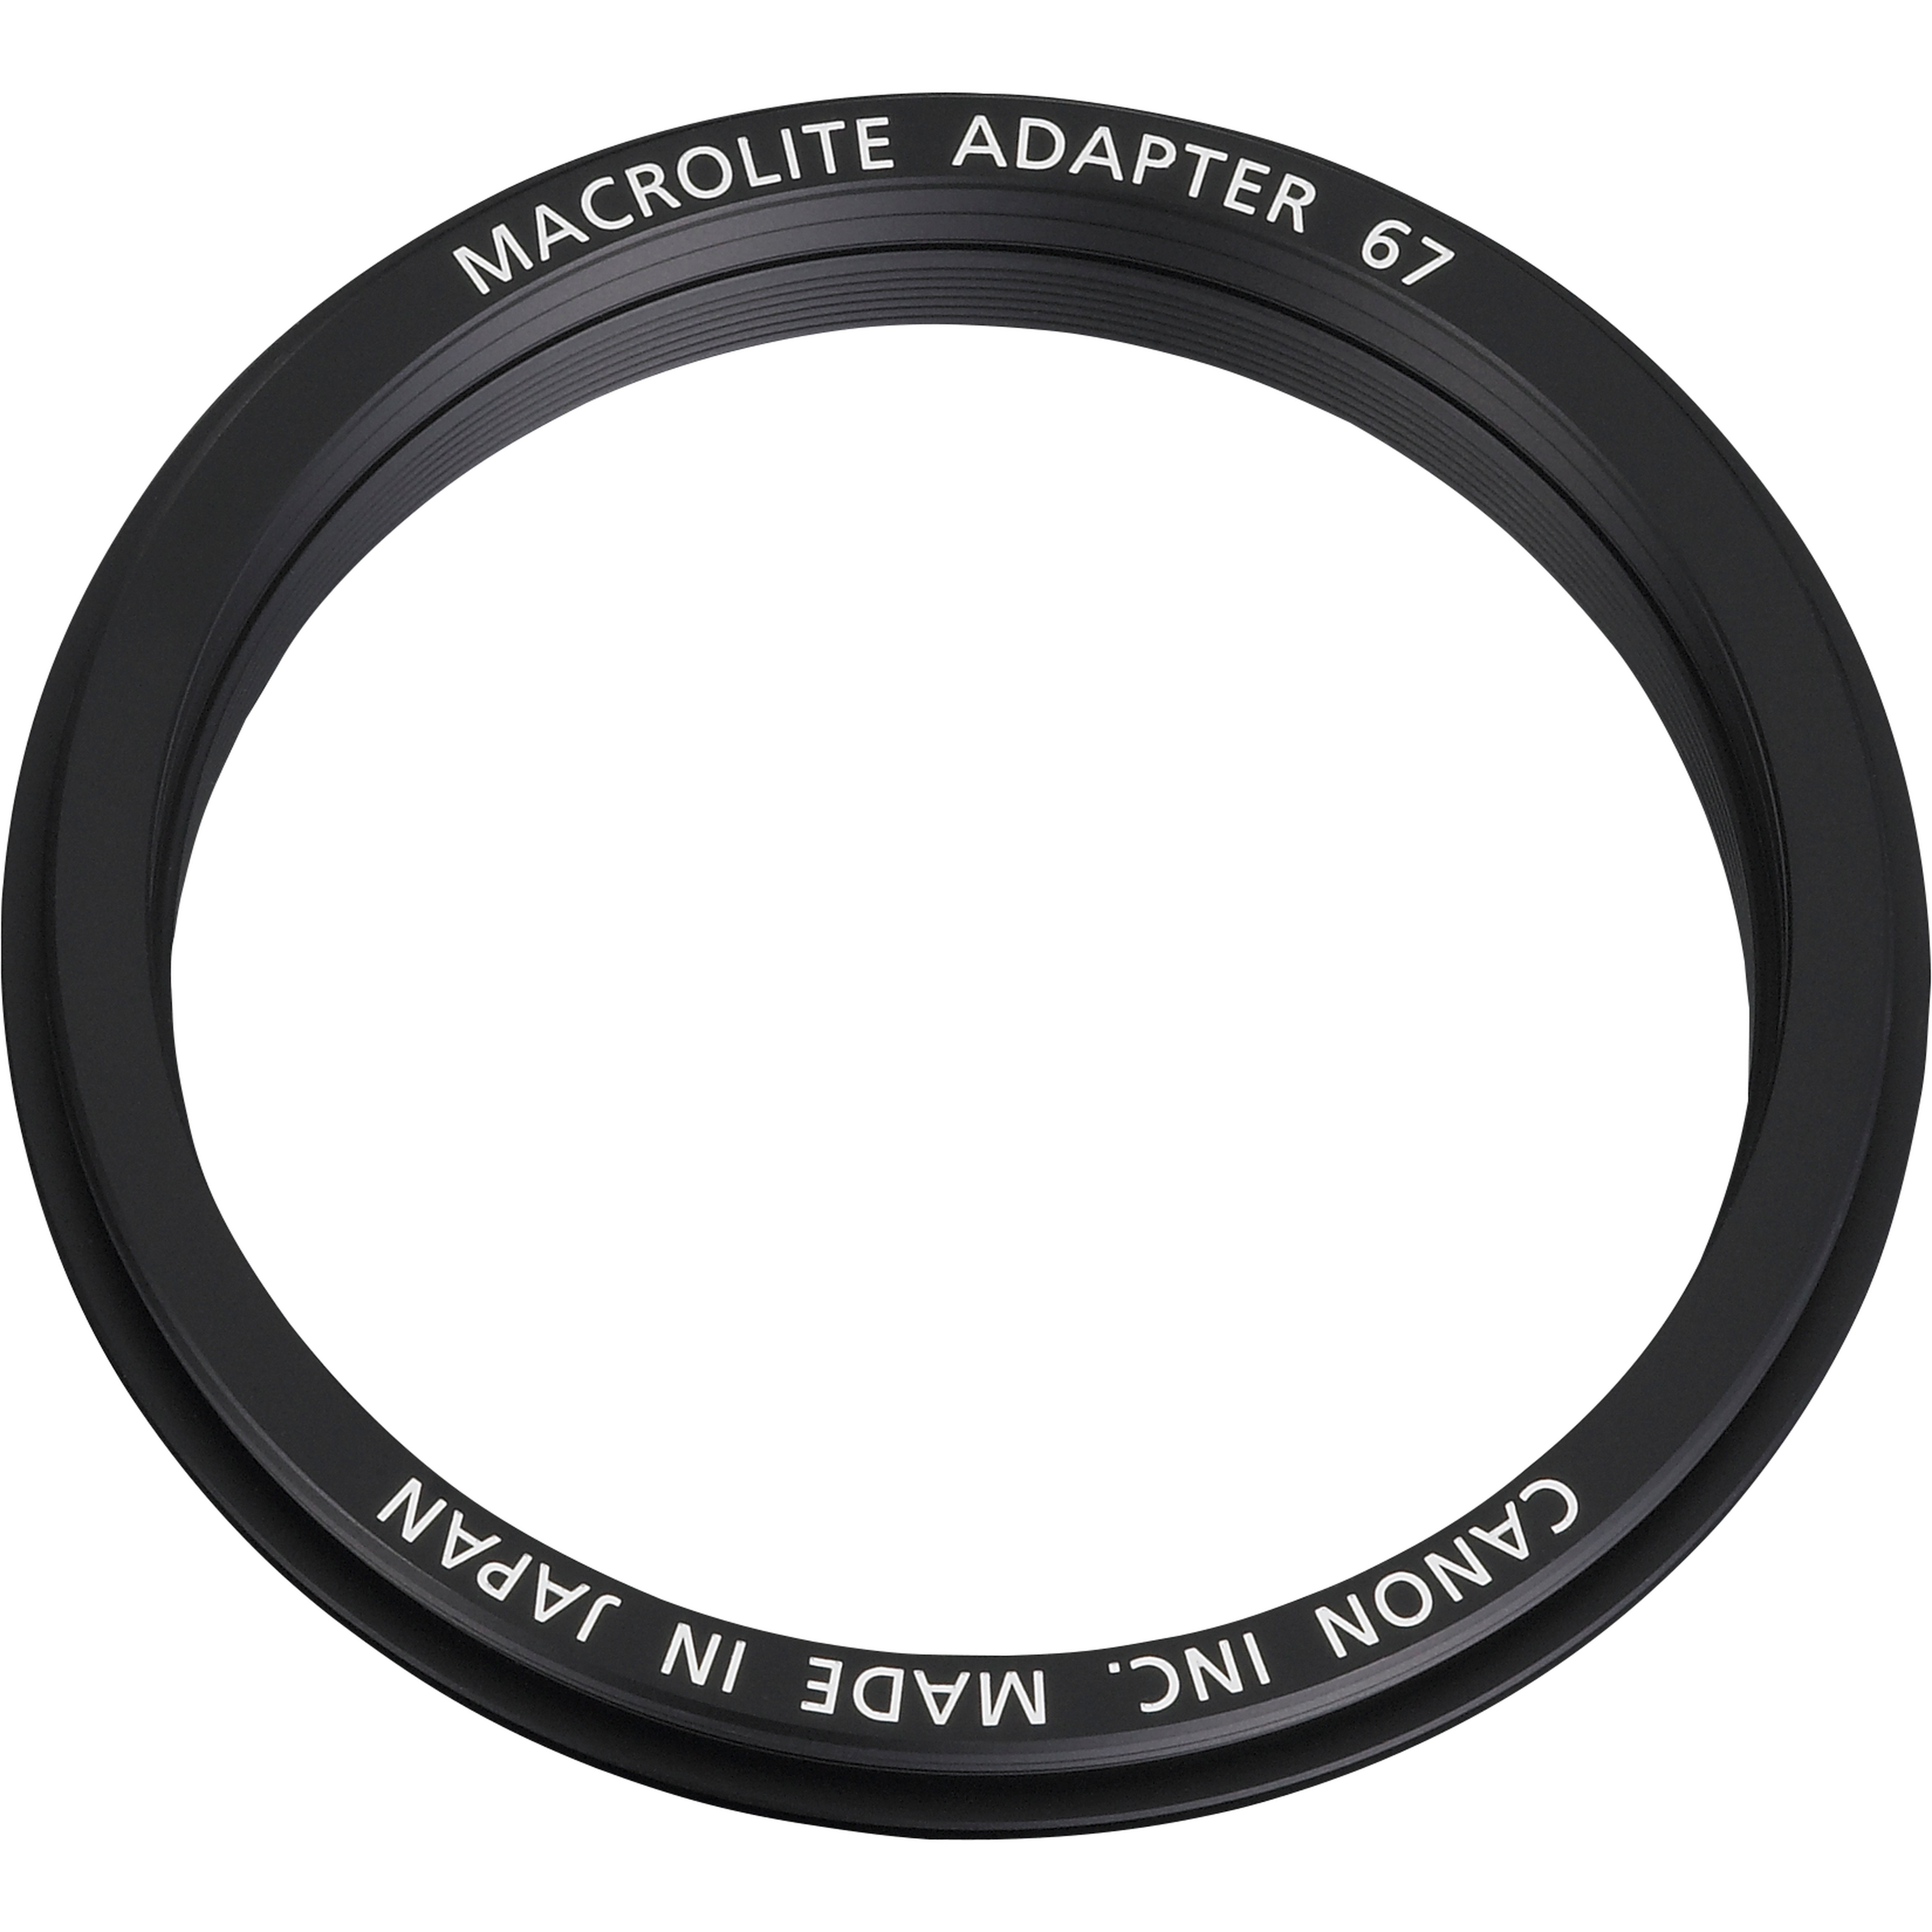 Canon Macrolite 67C - Macro flash adapter ring 67 mm thread - for MR-14EX, 14EX II, 14EX II Macro Ring Lite, MT-24EX